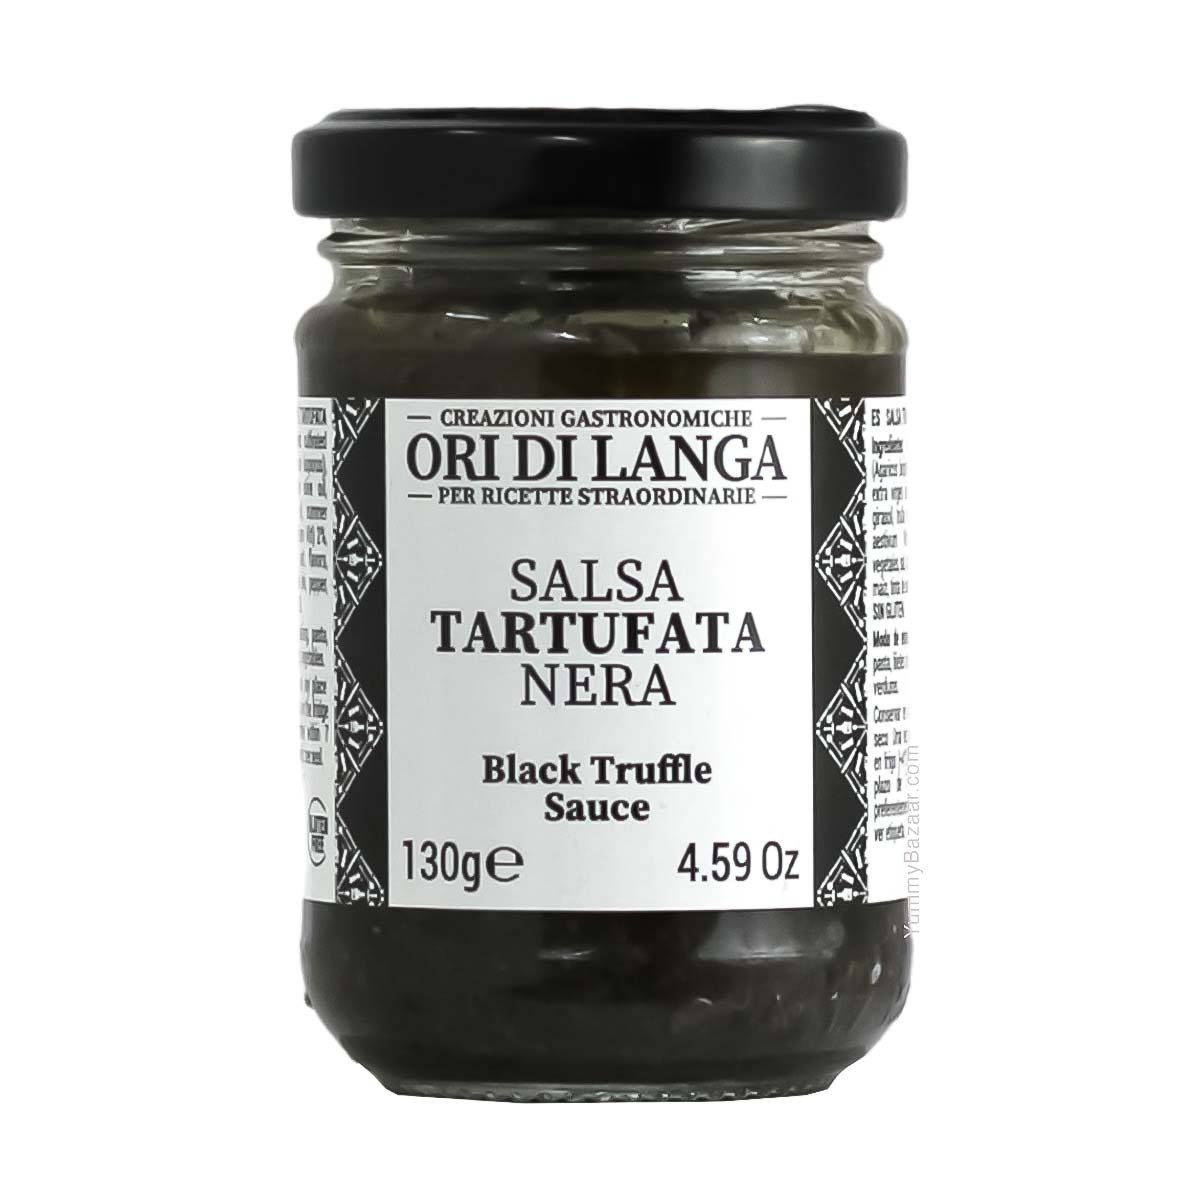 Oil & Vinegar Salsa Tartufata - 80g